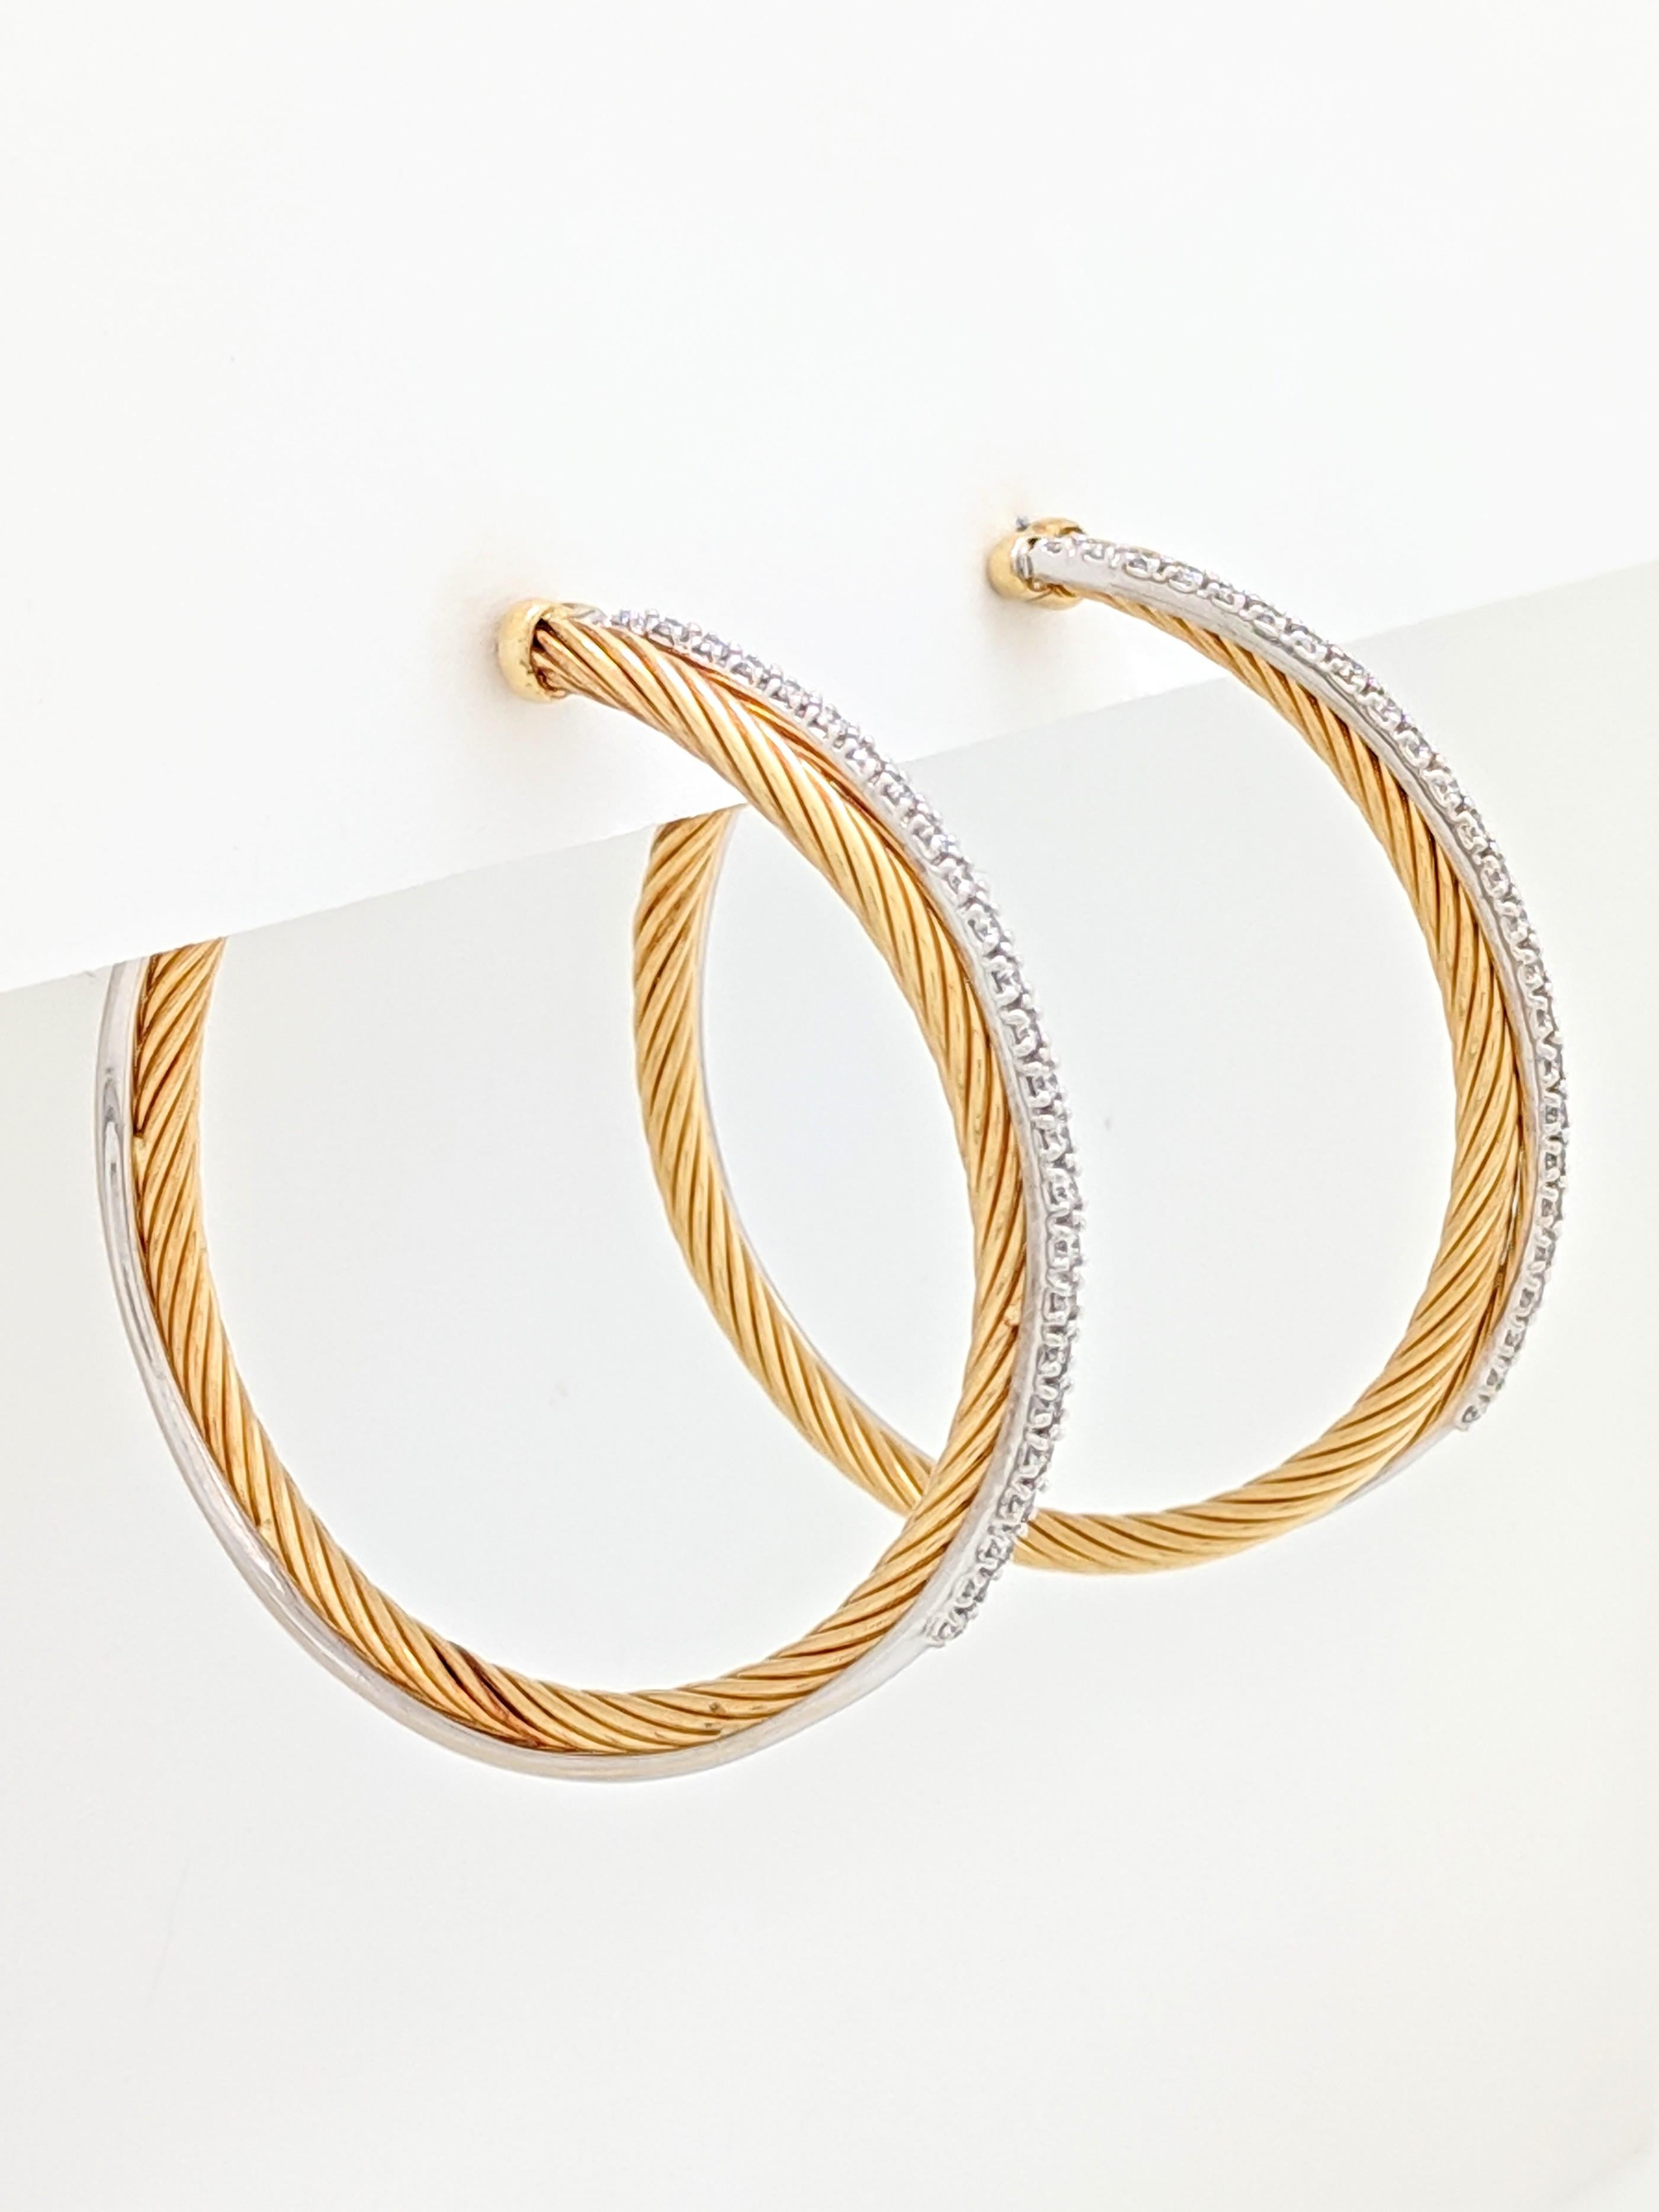 Contemporary David Yurman Crossover Extra Large Hoop Earrings w/ Diamonds in 18k 2-Tone Gold